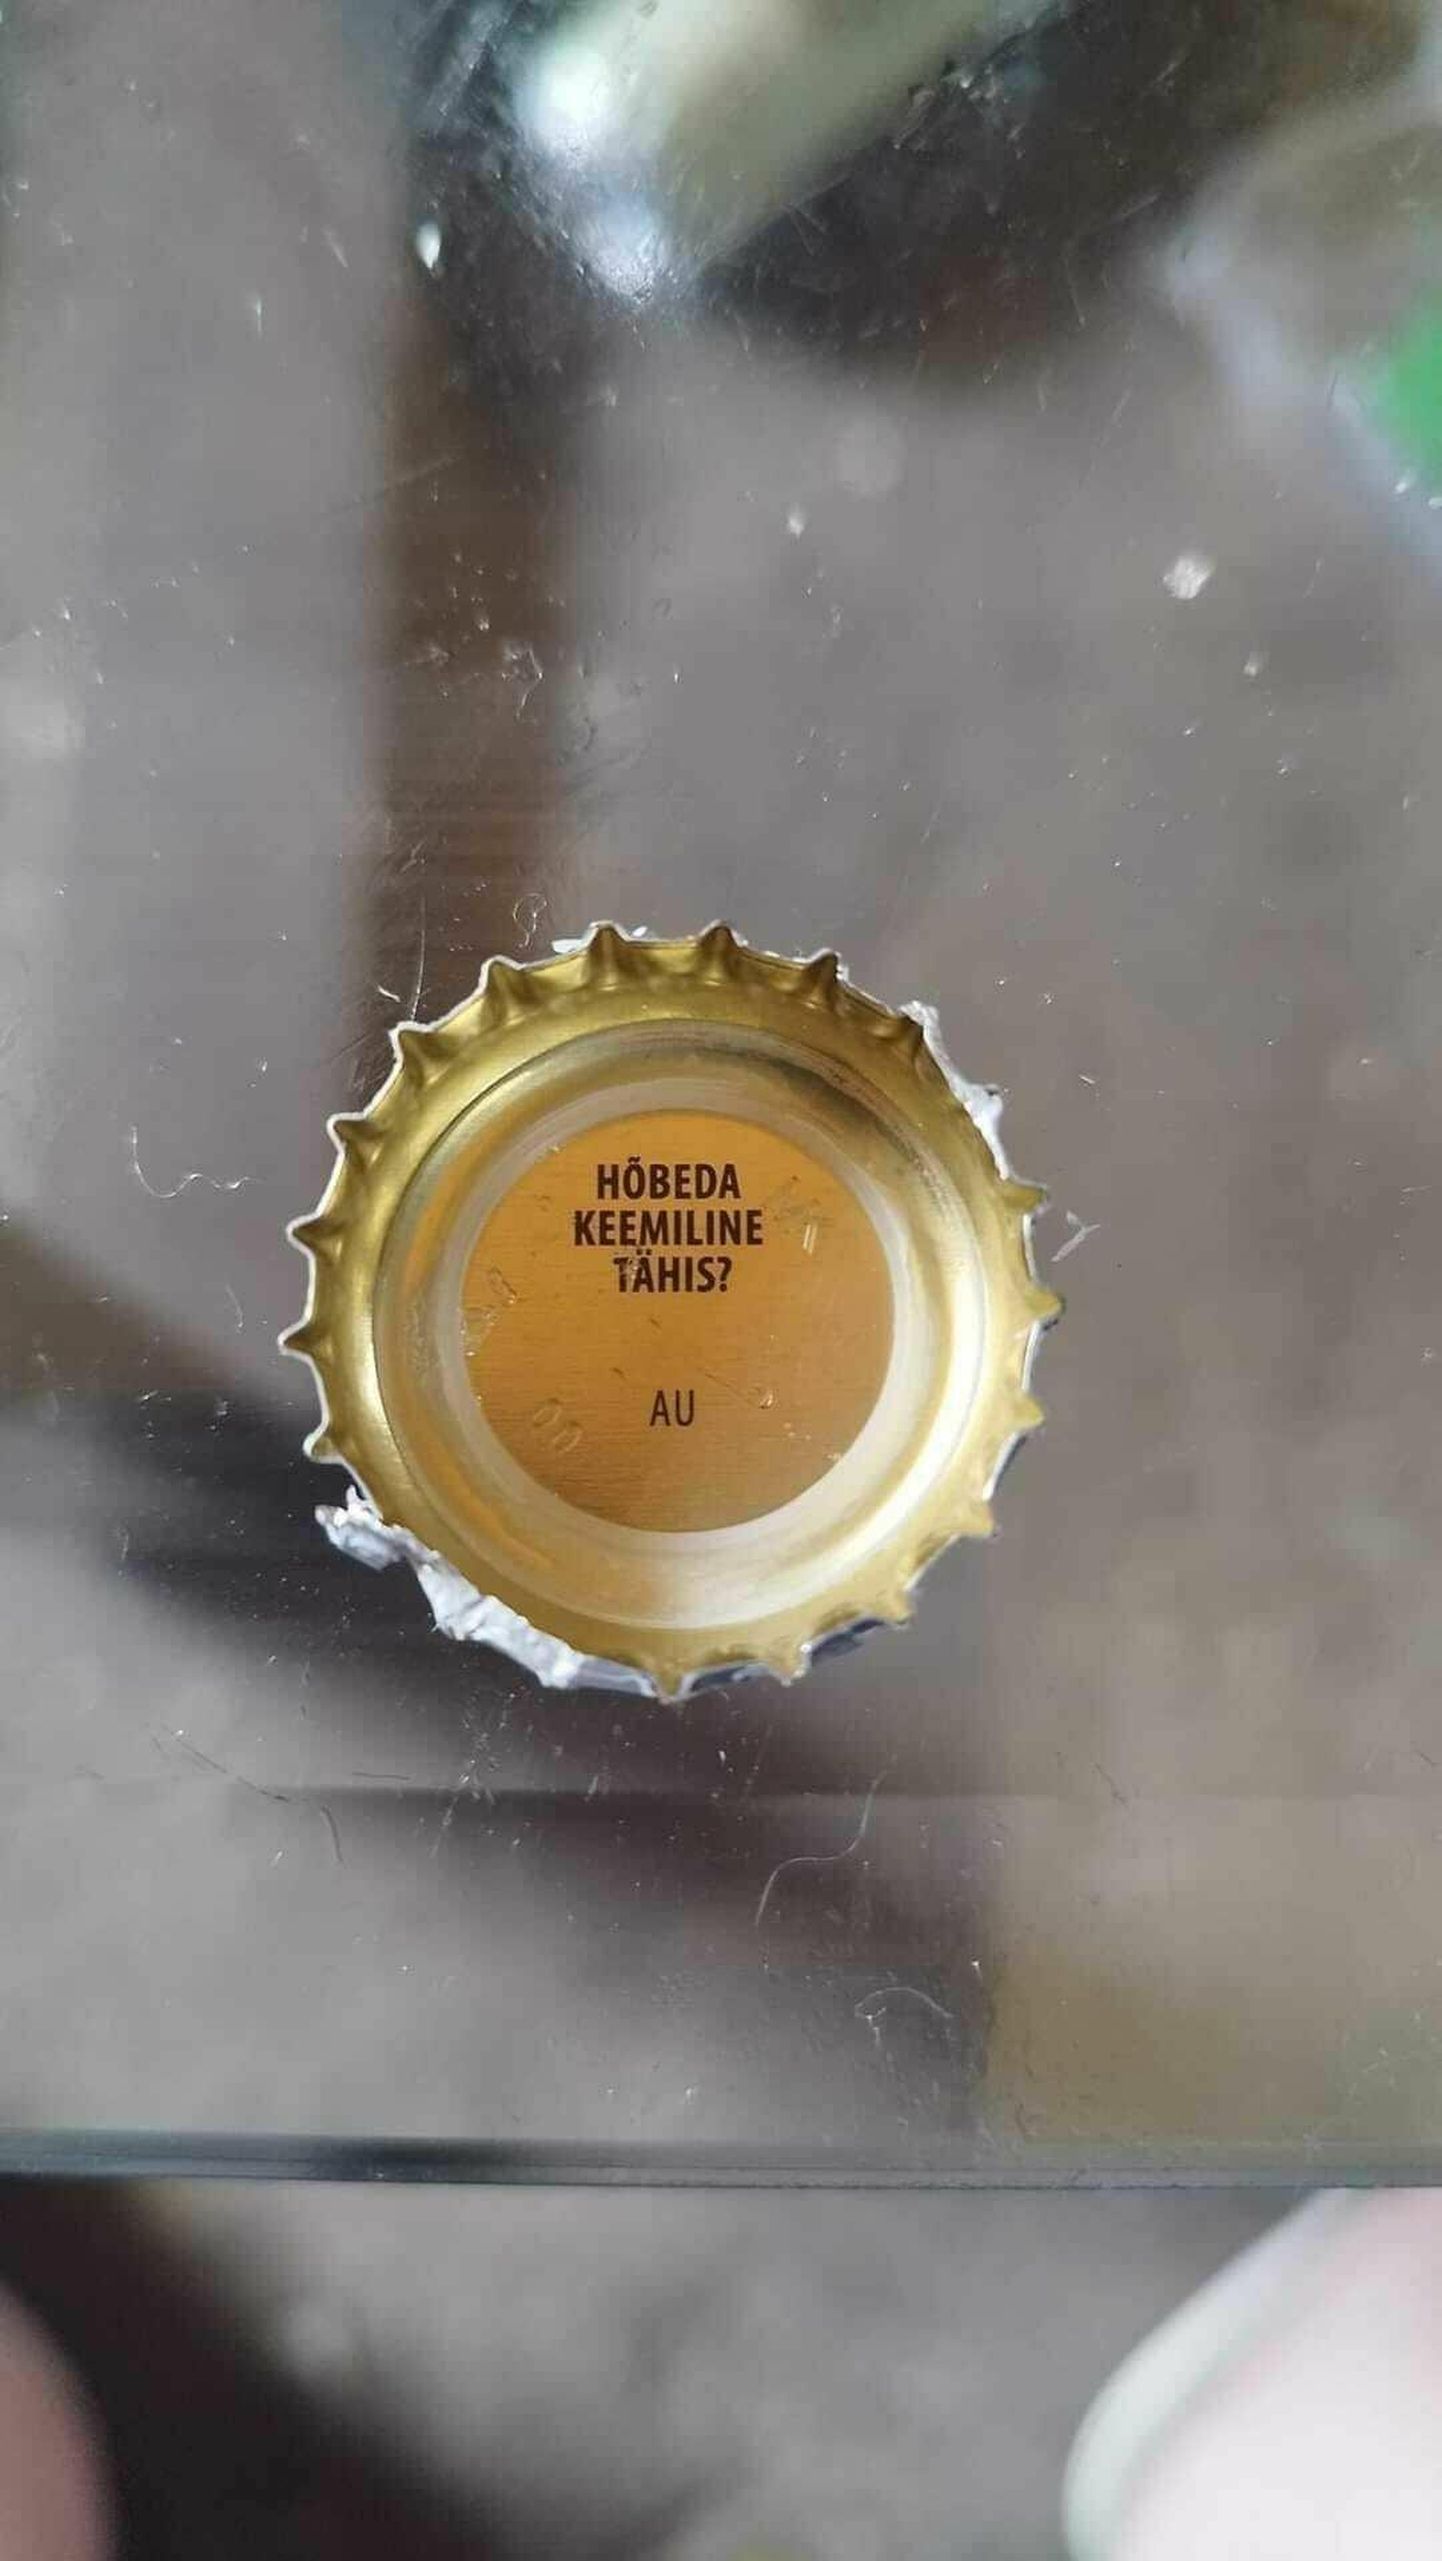 Фото наблюдательного любителя пиво из группы «Meedia- ja reklaamipärleid meilt ja mujalt» в Facebook.